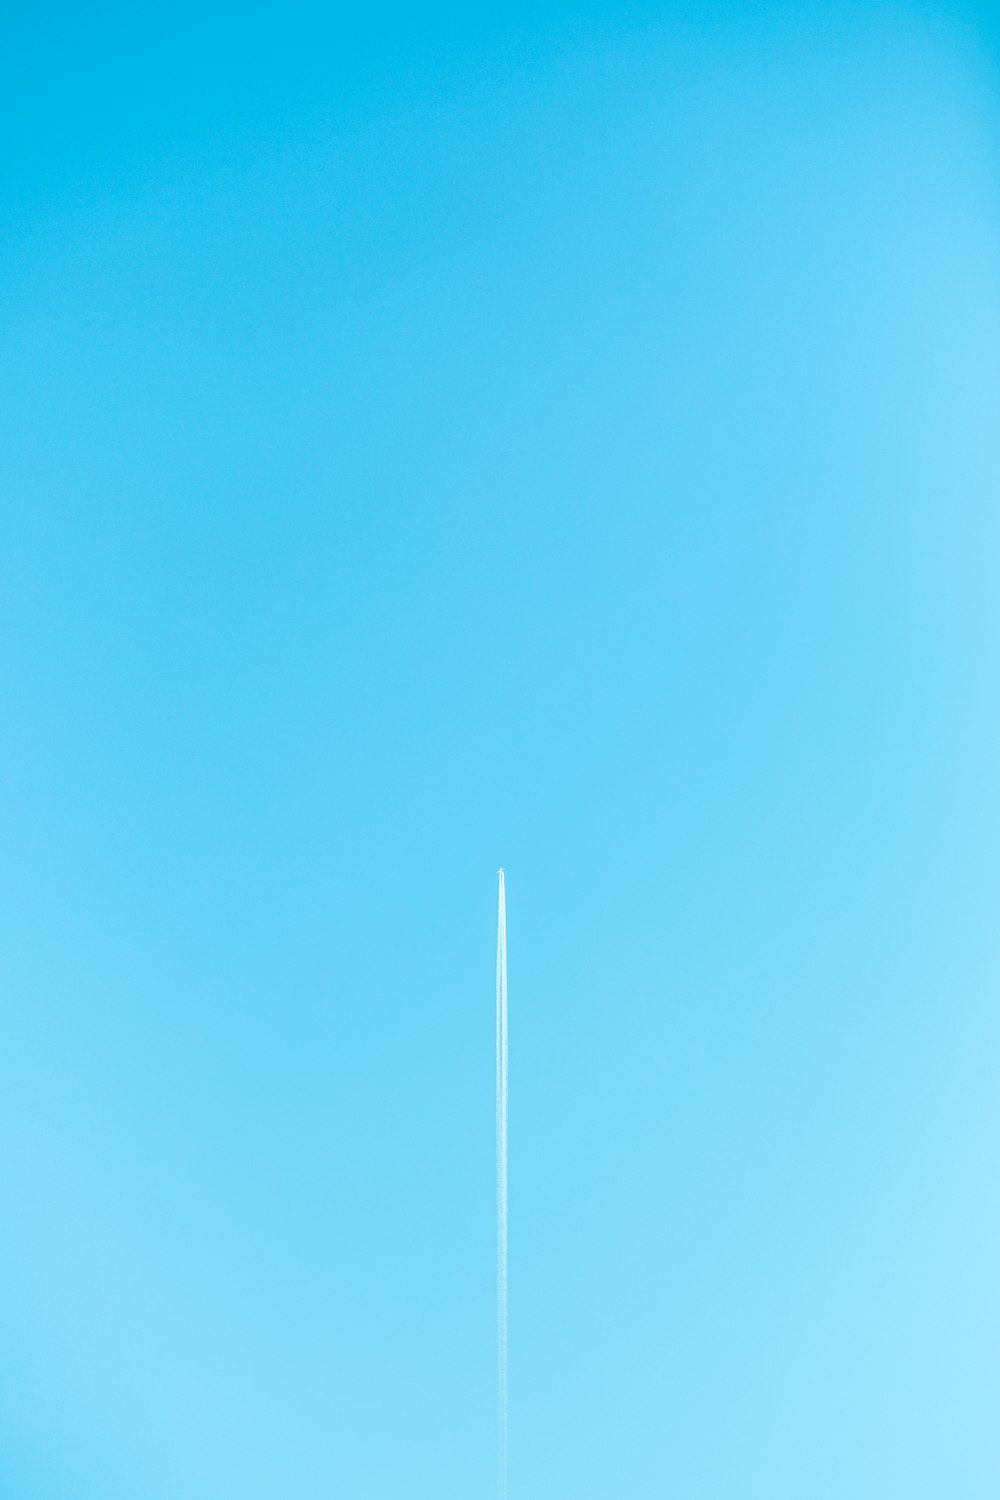 white plane on blue sky during daytime